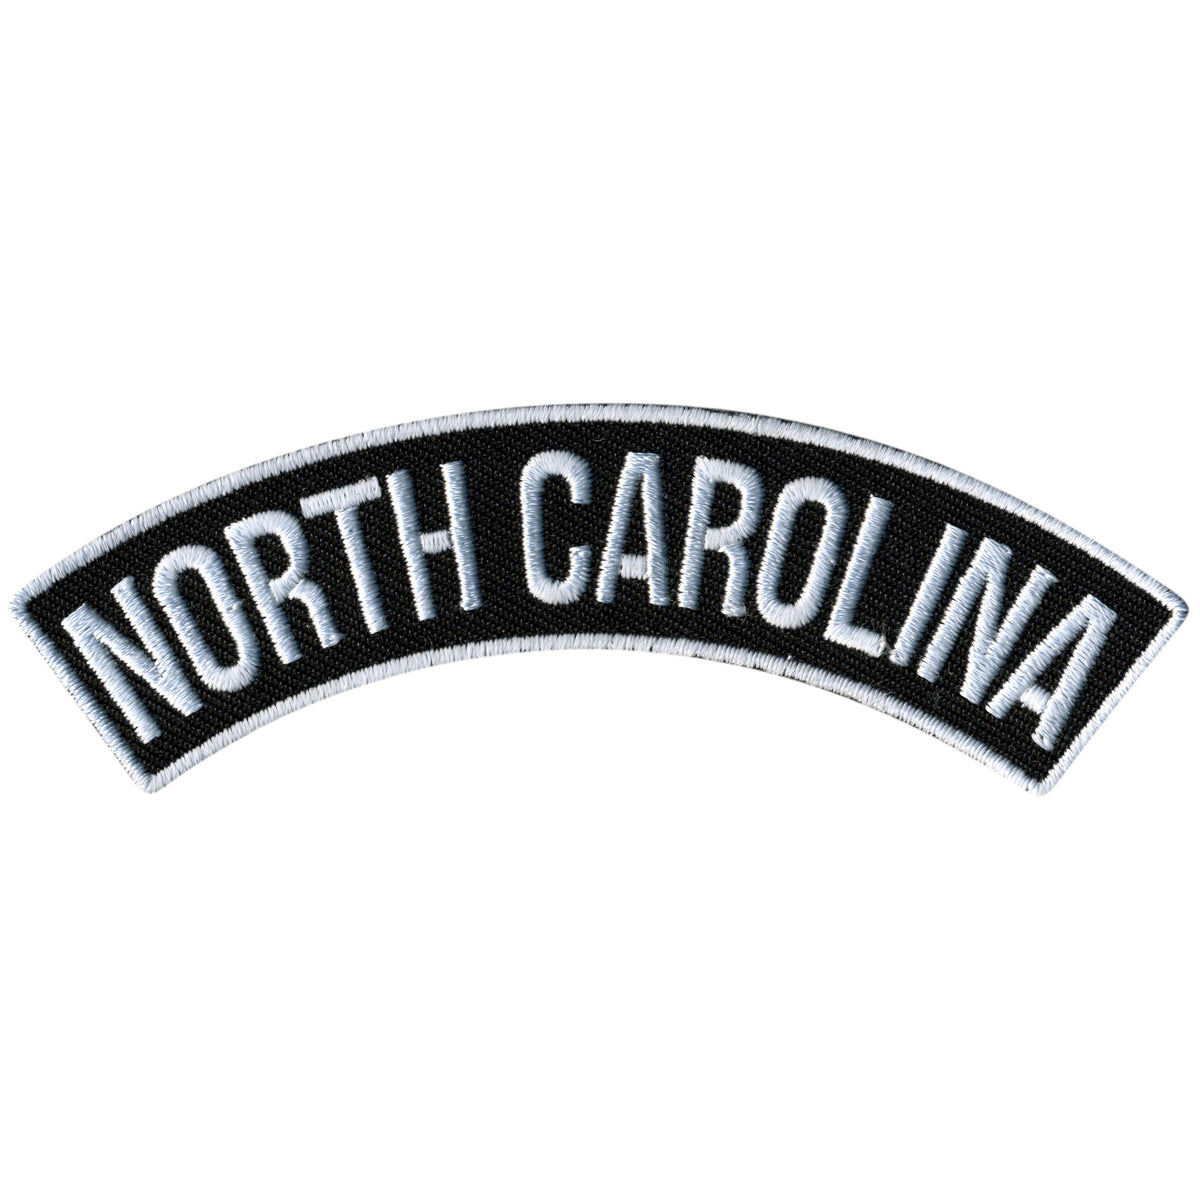 Hot Leathers North Carolina 4” X 1” Top Rocker Patch